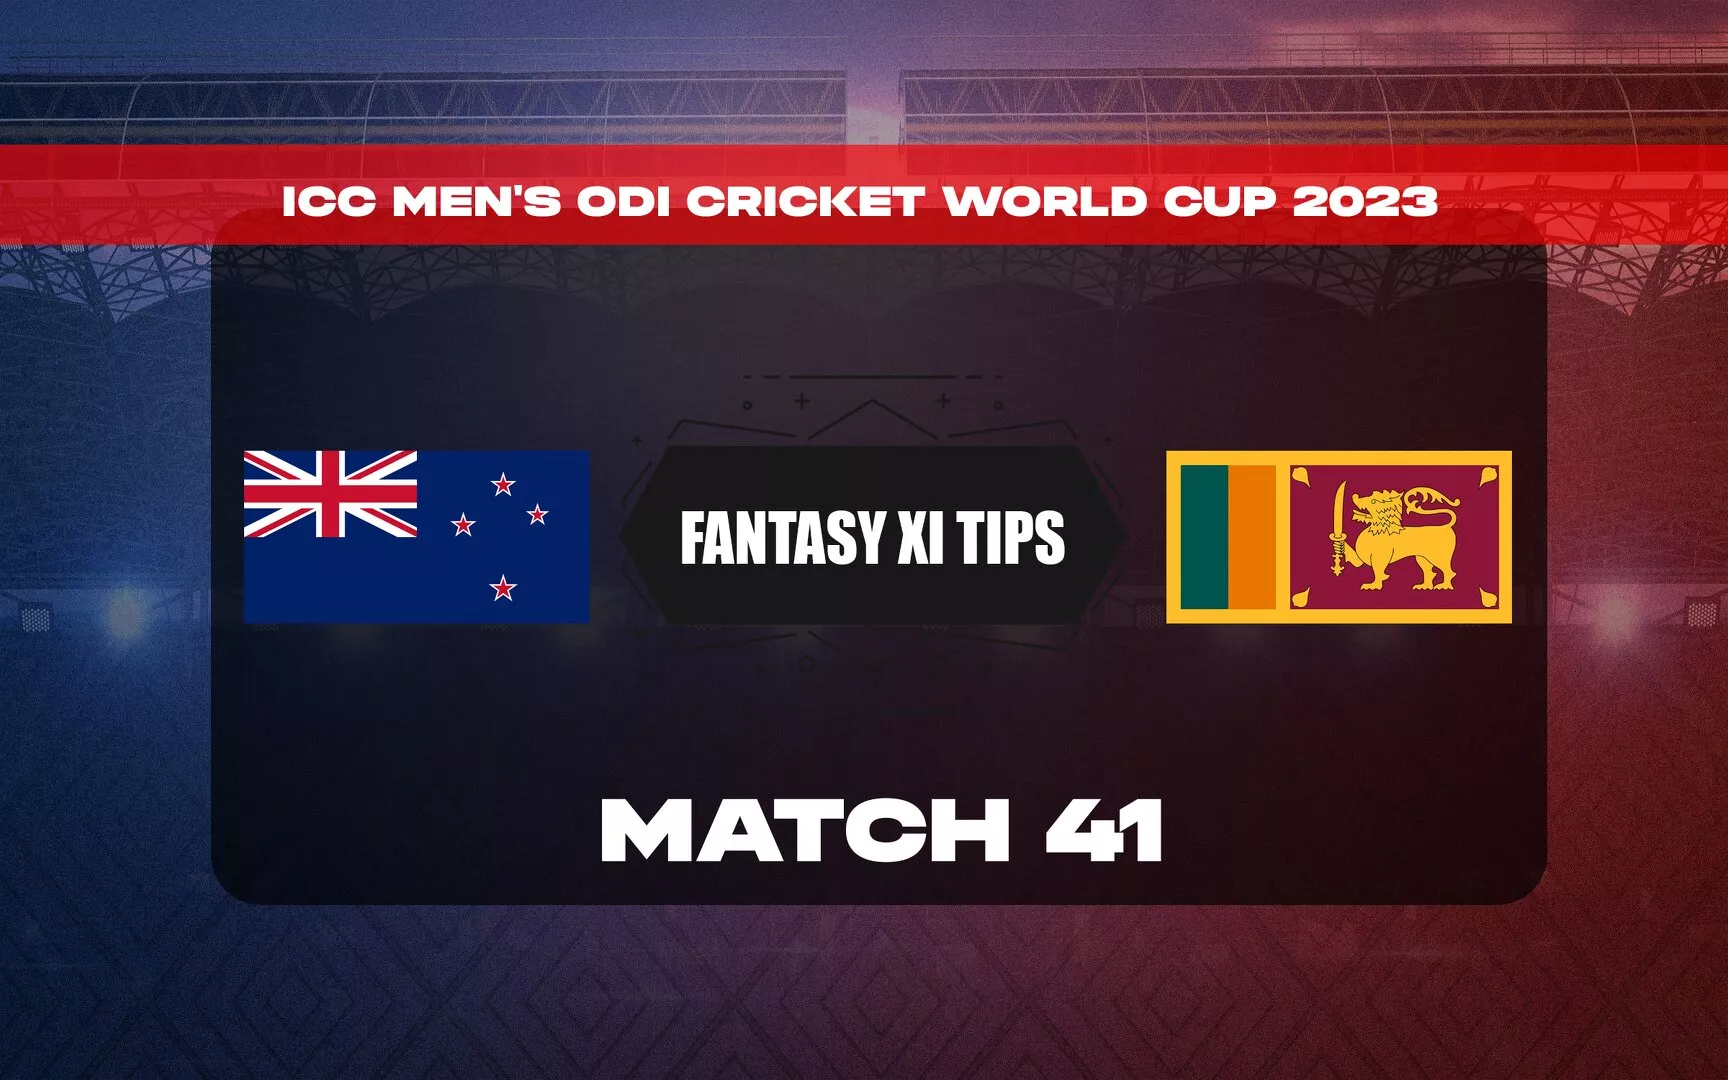 NZ vs SL Dream11 Prediction, Dream11 Playing XI, Today Match 41, ICC Men’s ODI Cricket World Cup 2023